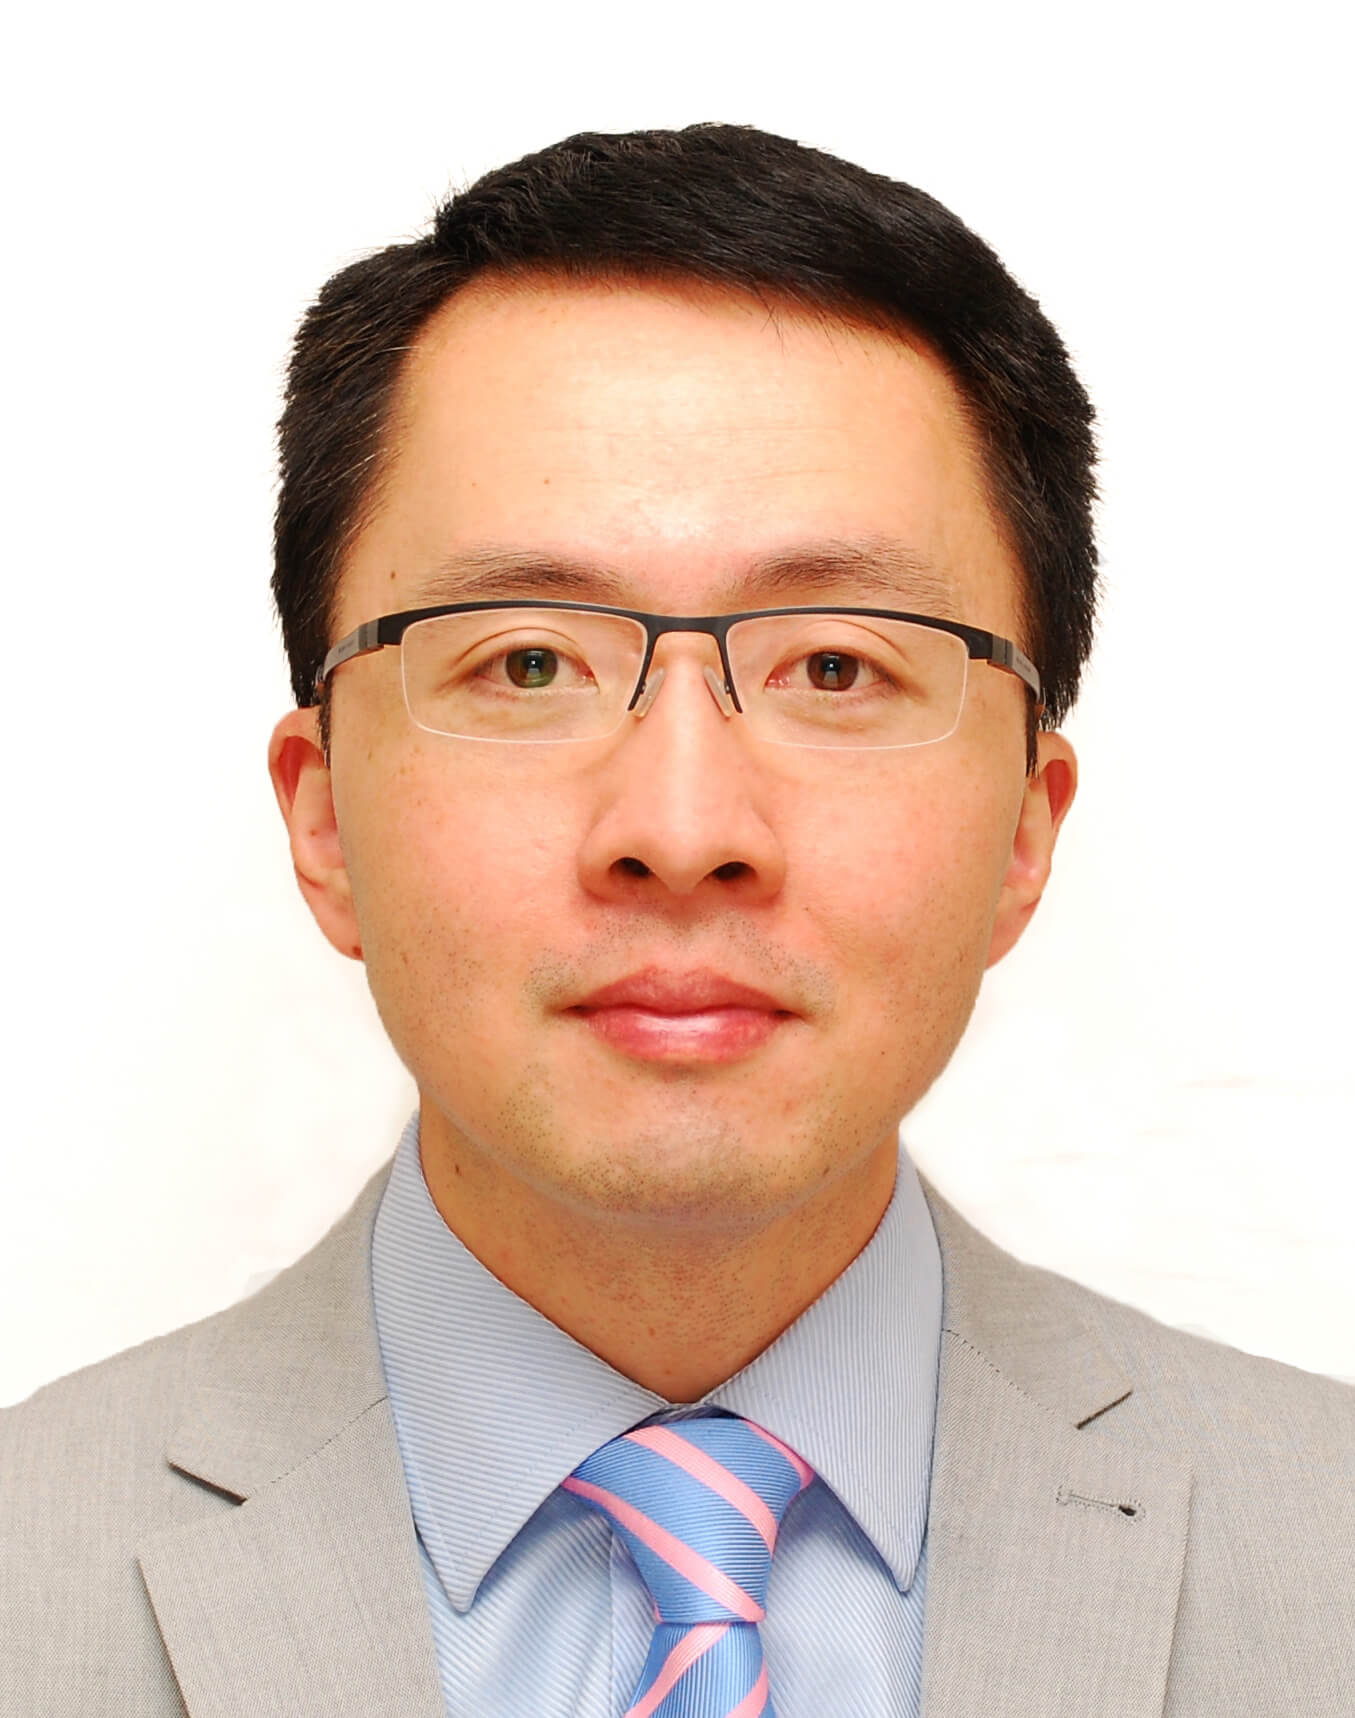 Patrick Yu-Wai-Man, MD, PhD